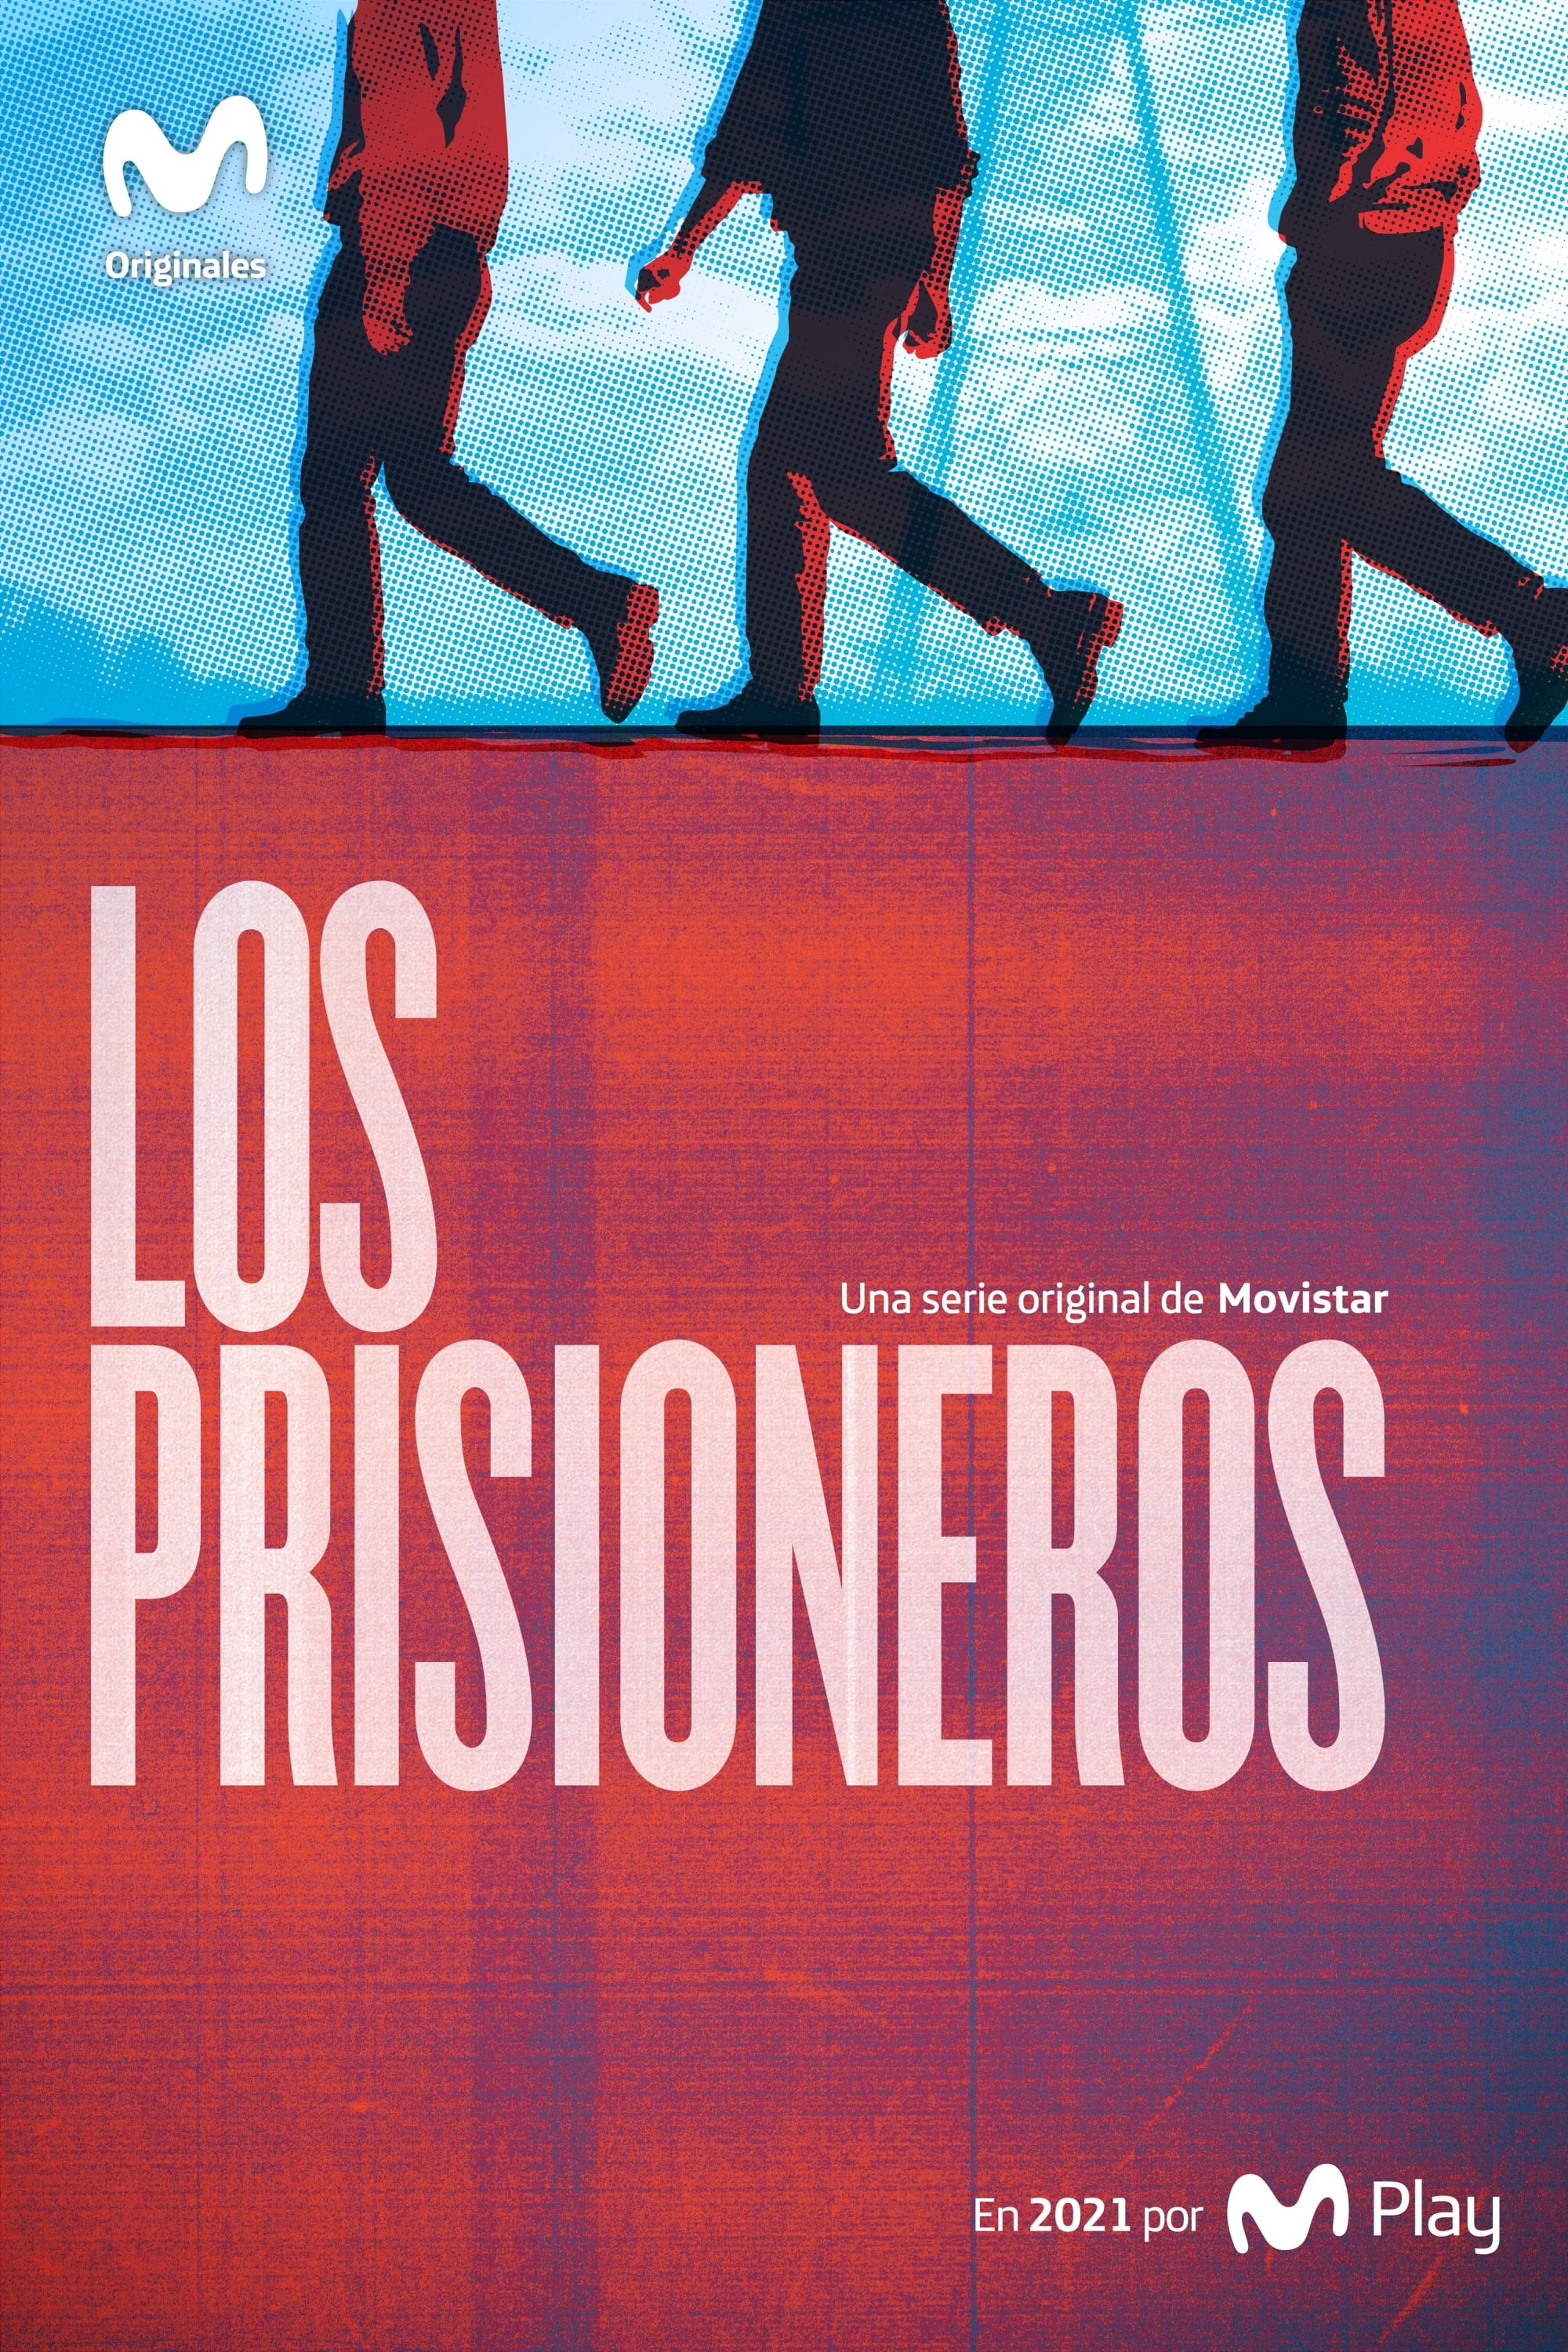 Los Prisioneros TV Shows About Biography